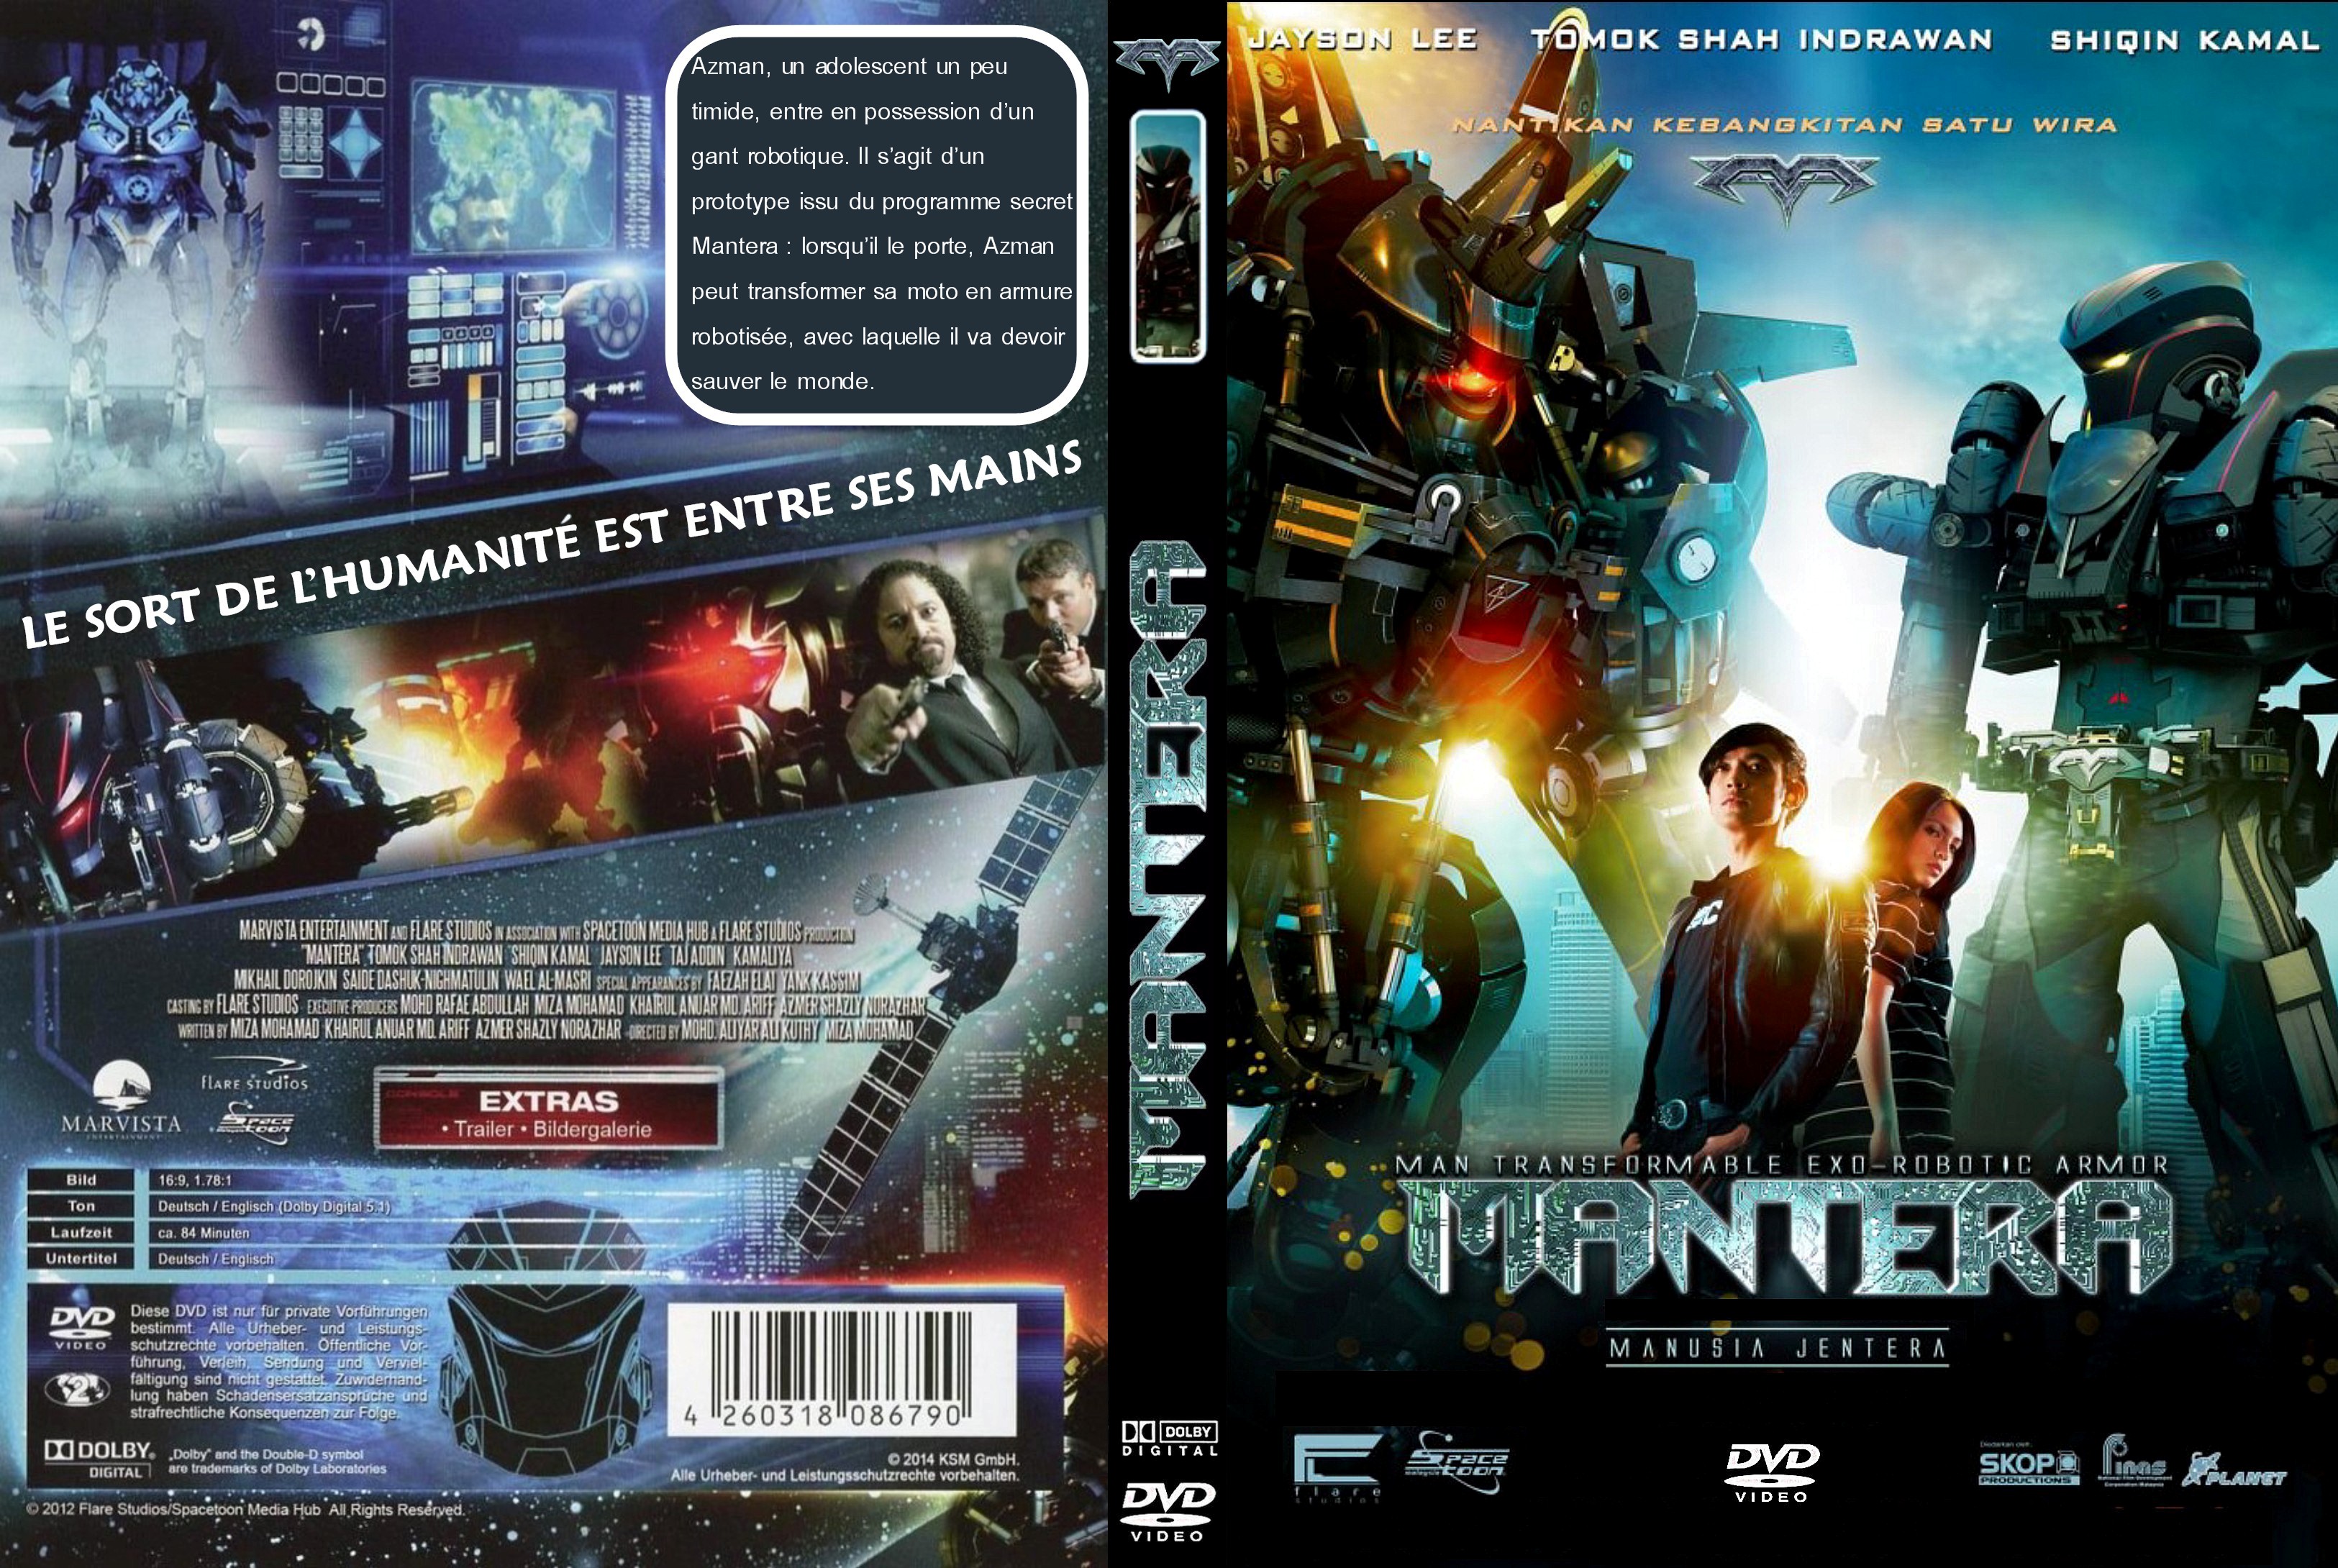 Jaquette DVD Mantera custom v2